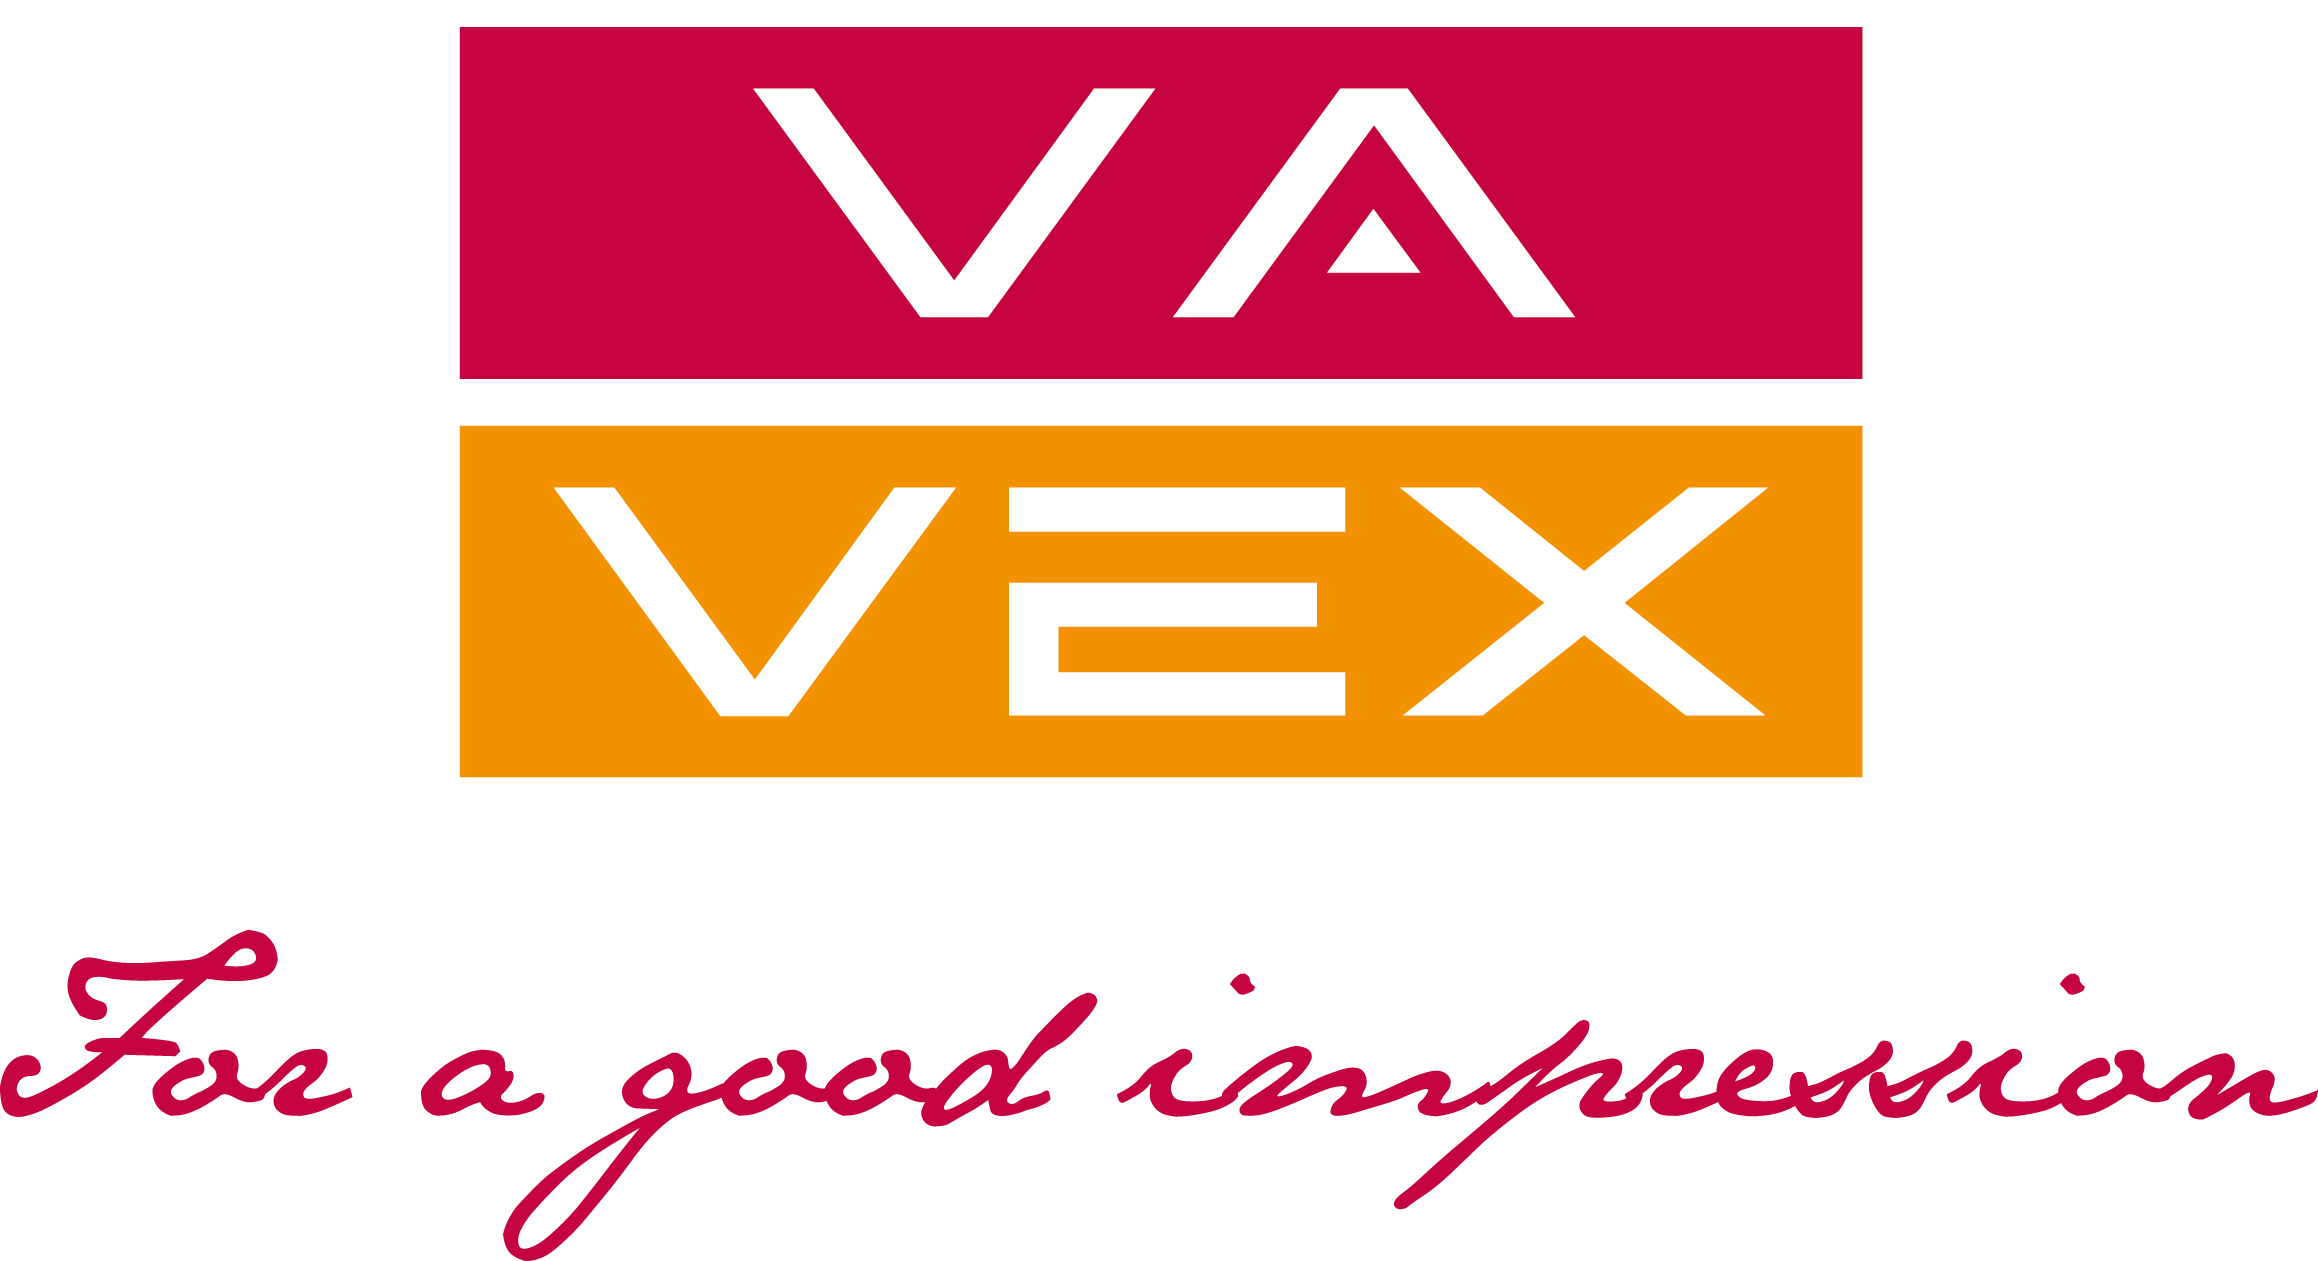 VaVex